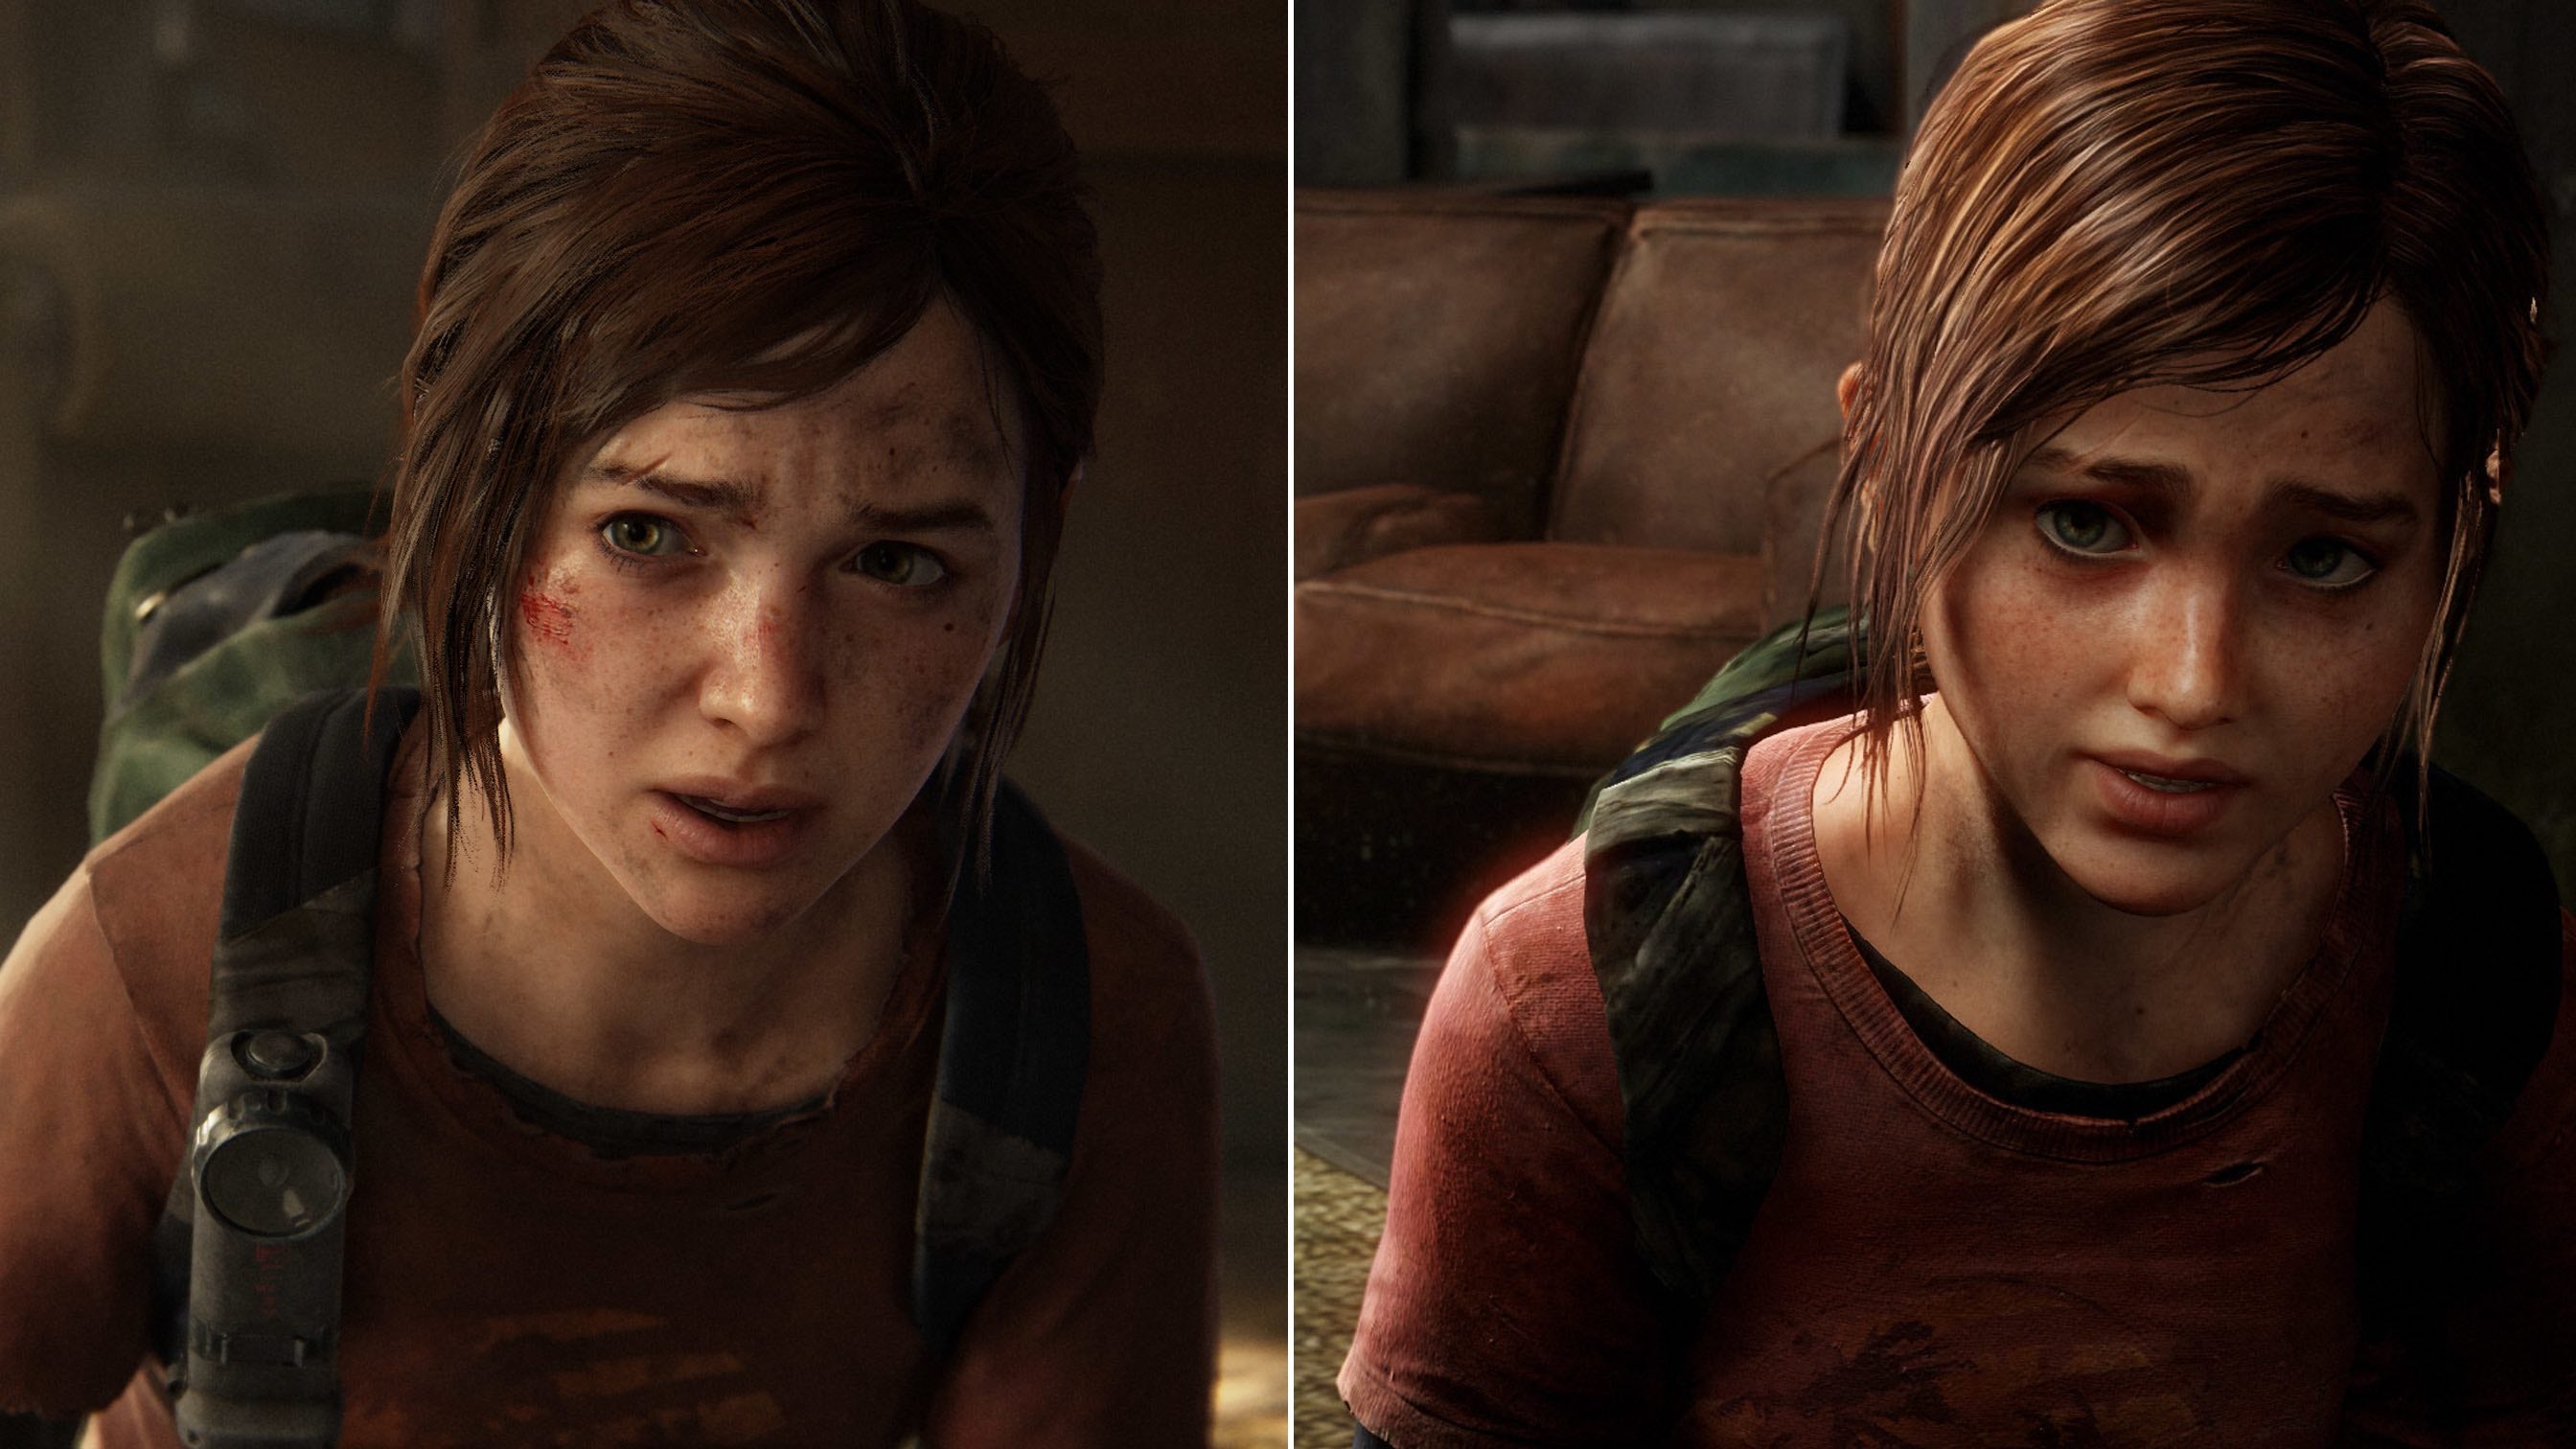 Vídeo compara os gráficos e desempenho de The Last of Us Remake rodando no  PC, PS5